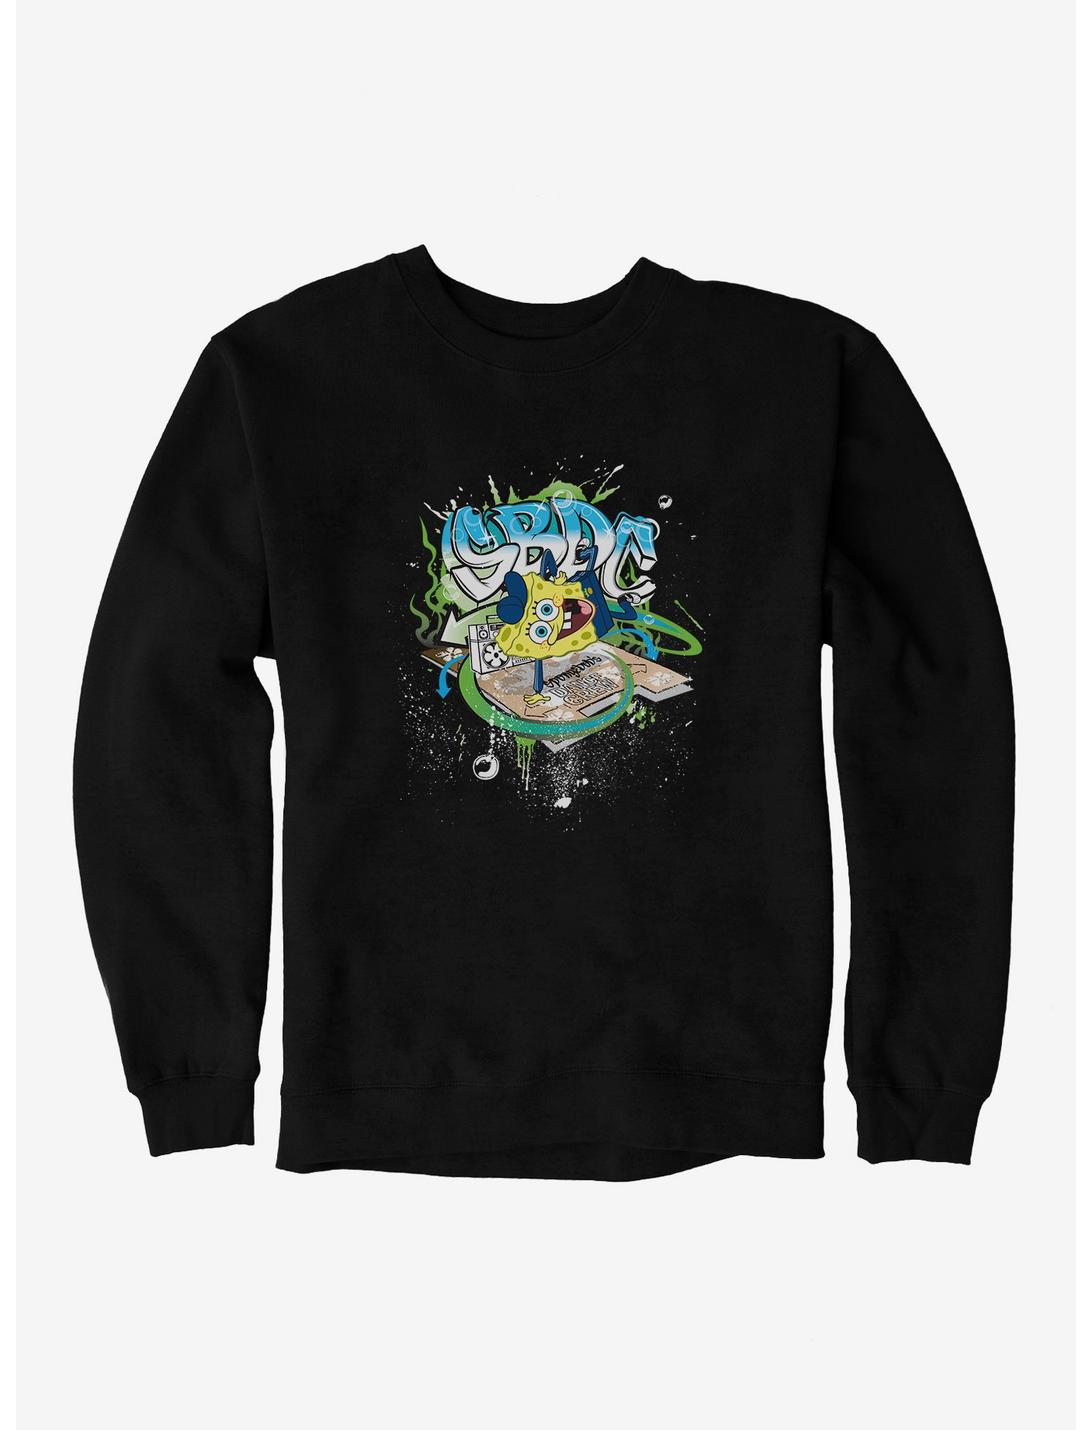 SpongeBob SquarePants SBDC Street Dancer Sweatshirt, BLACK, hi-res